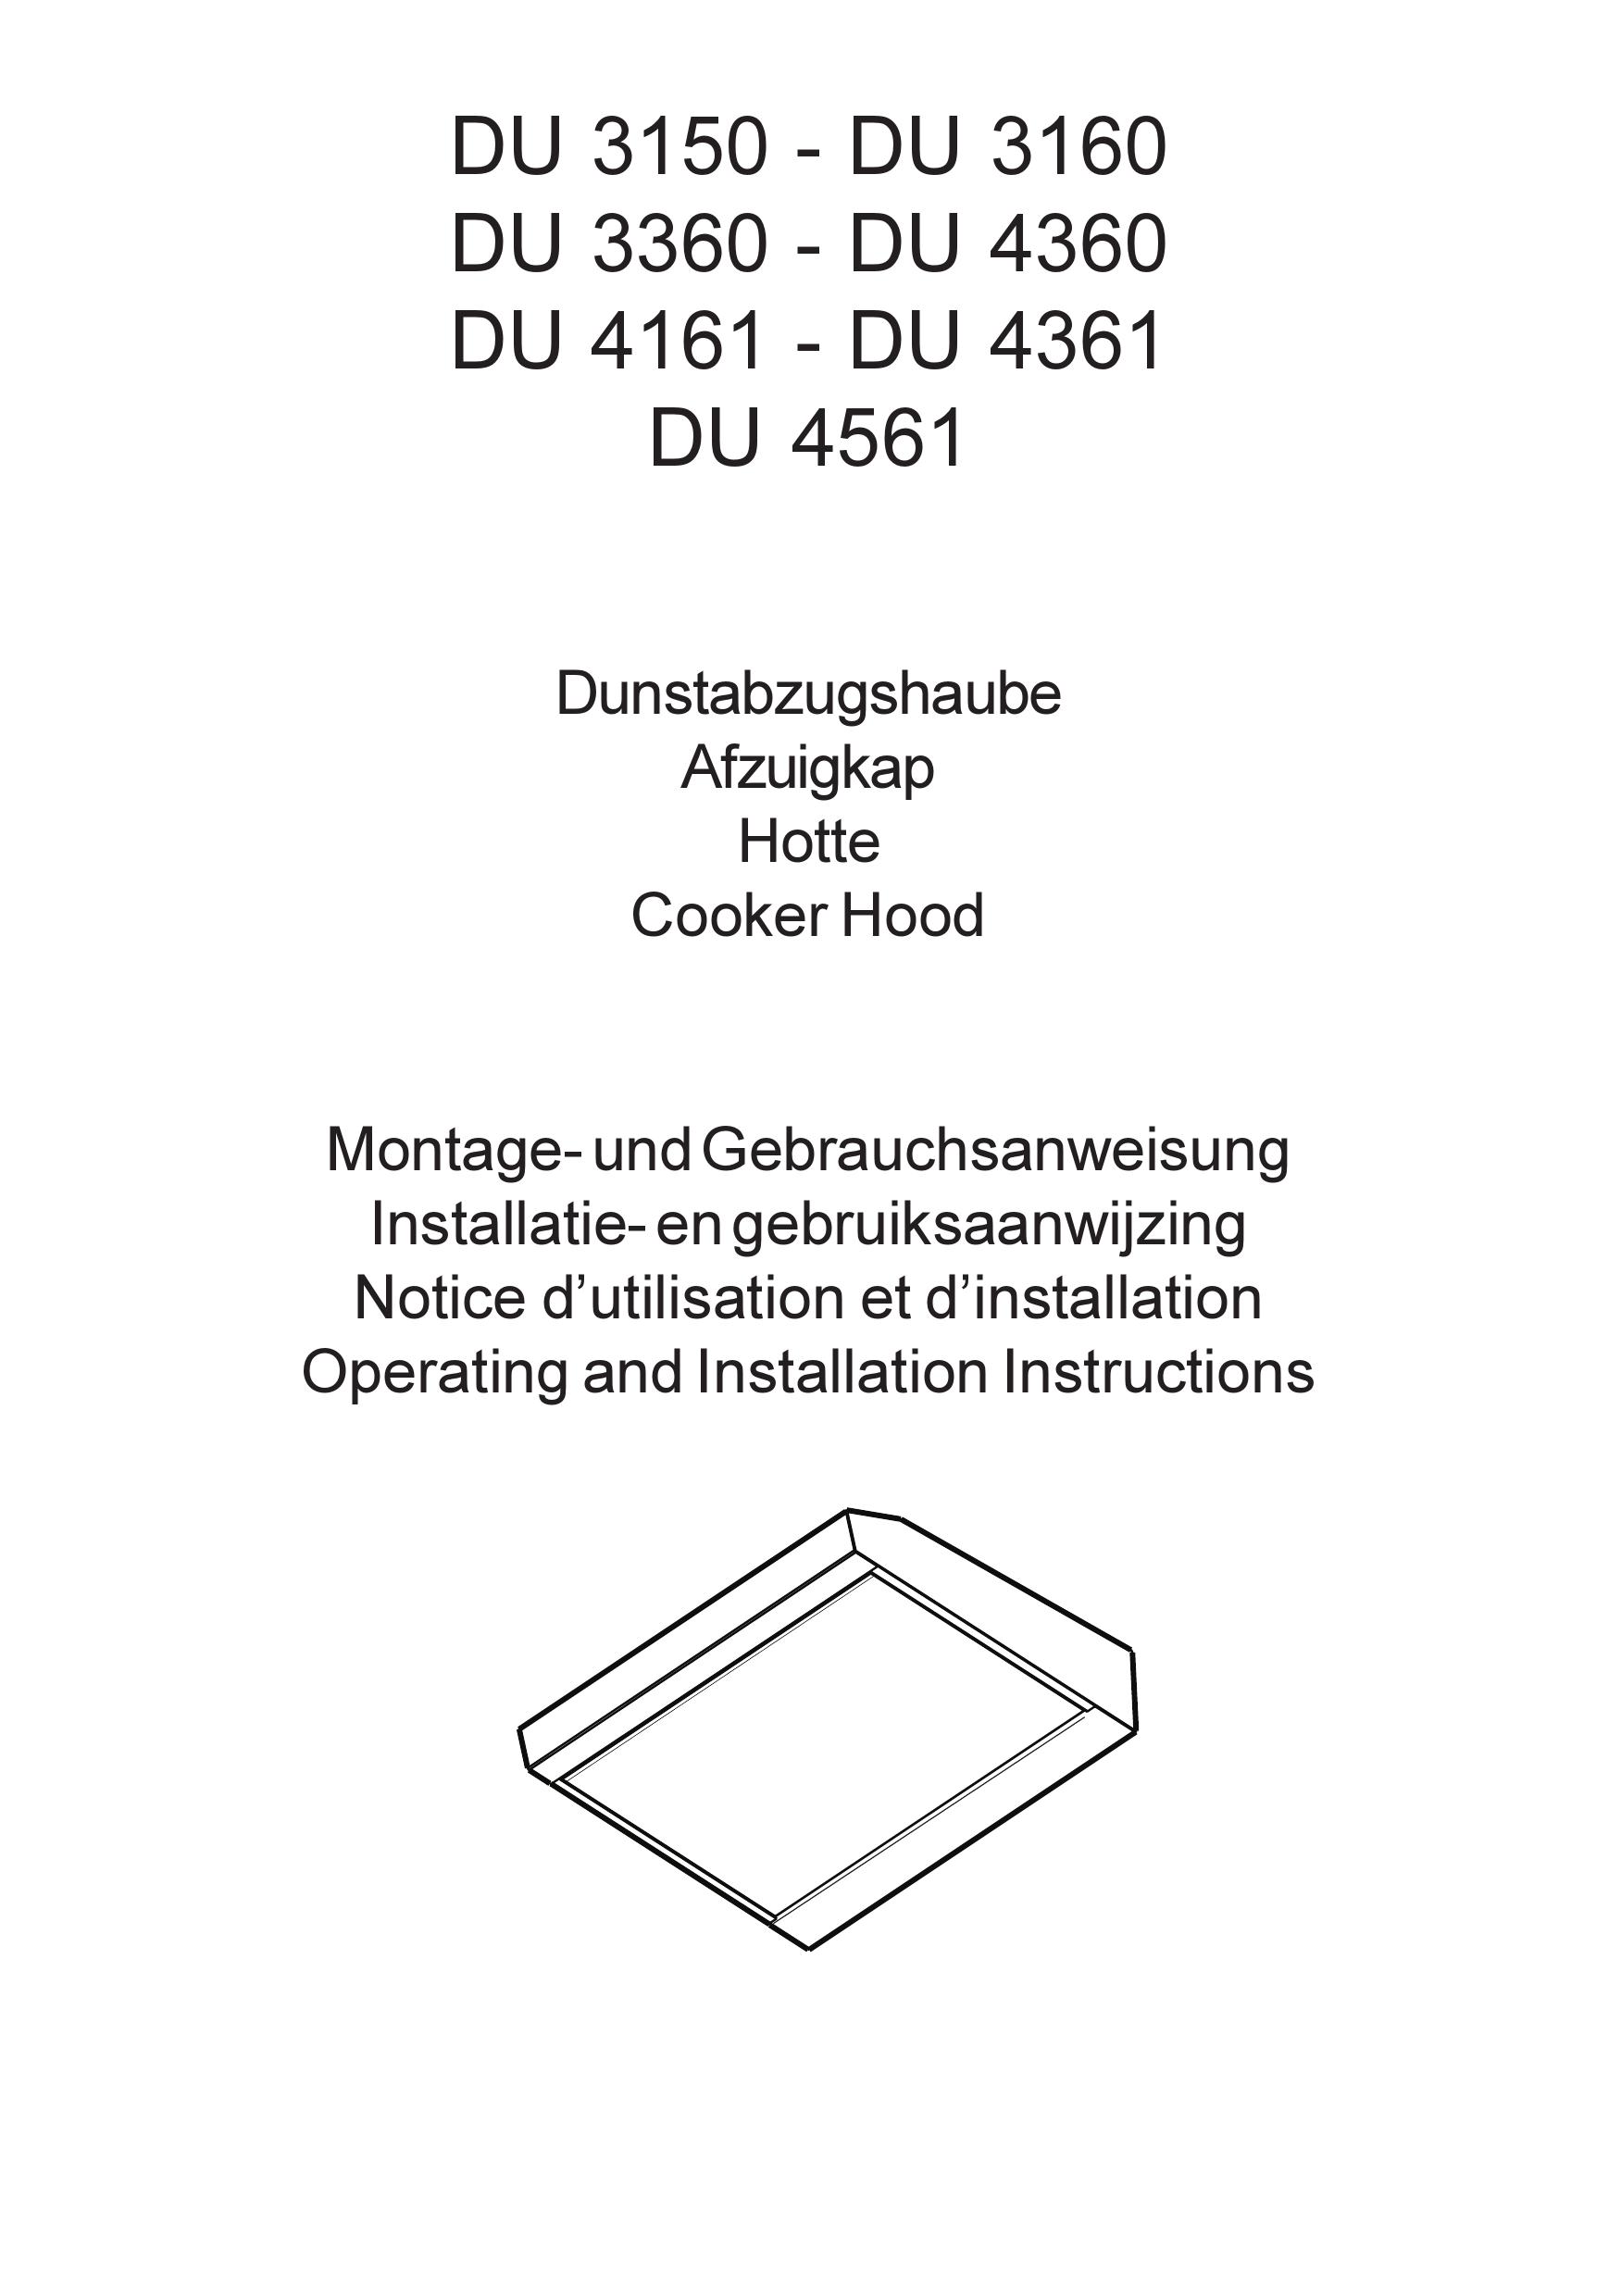 AEG DU 4360 Ventilation Hood User Manual